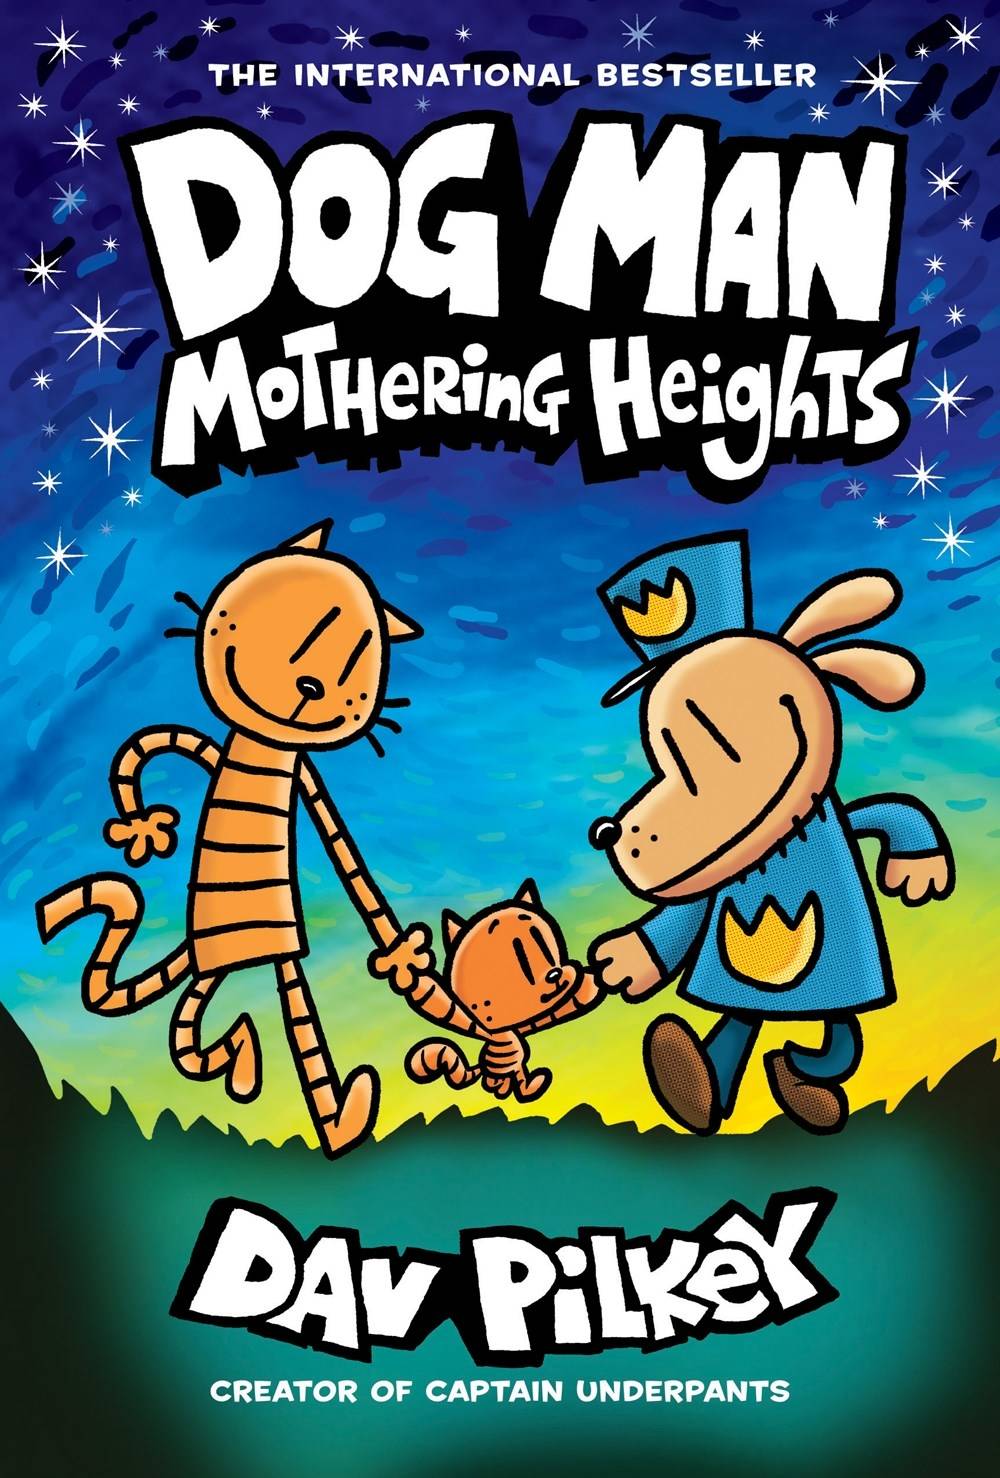 Dog Man Vol. 10 Mothering Heights